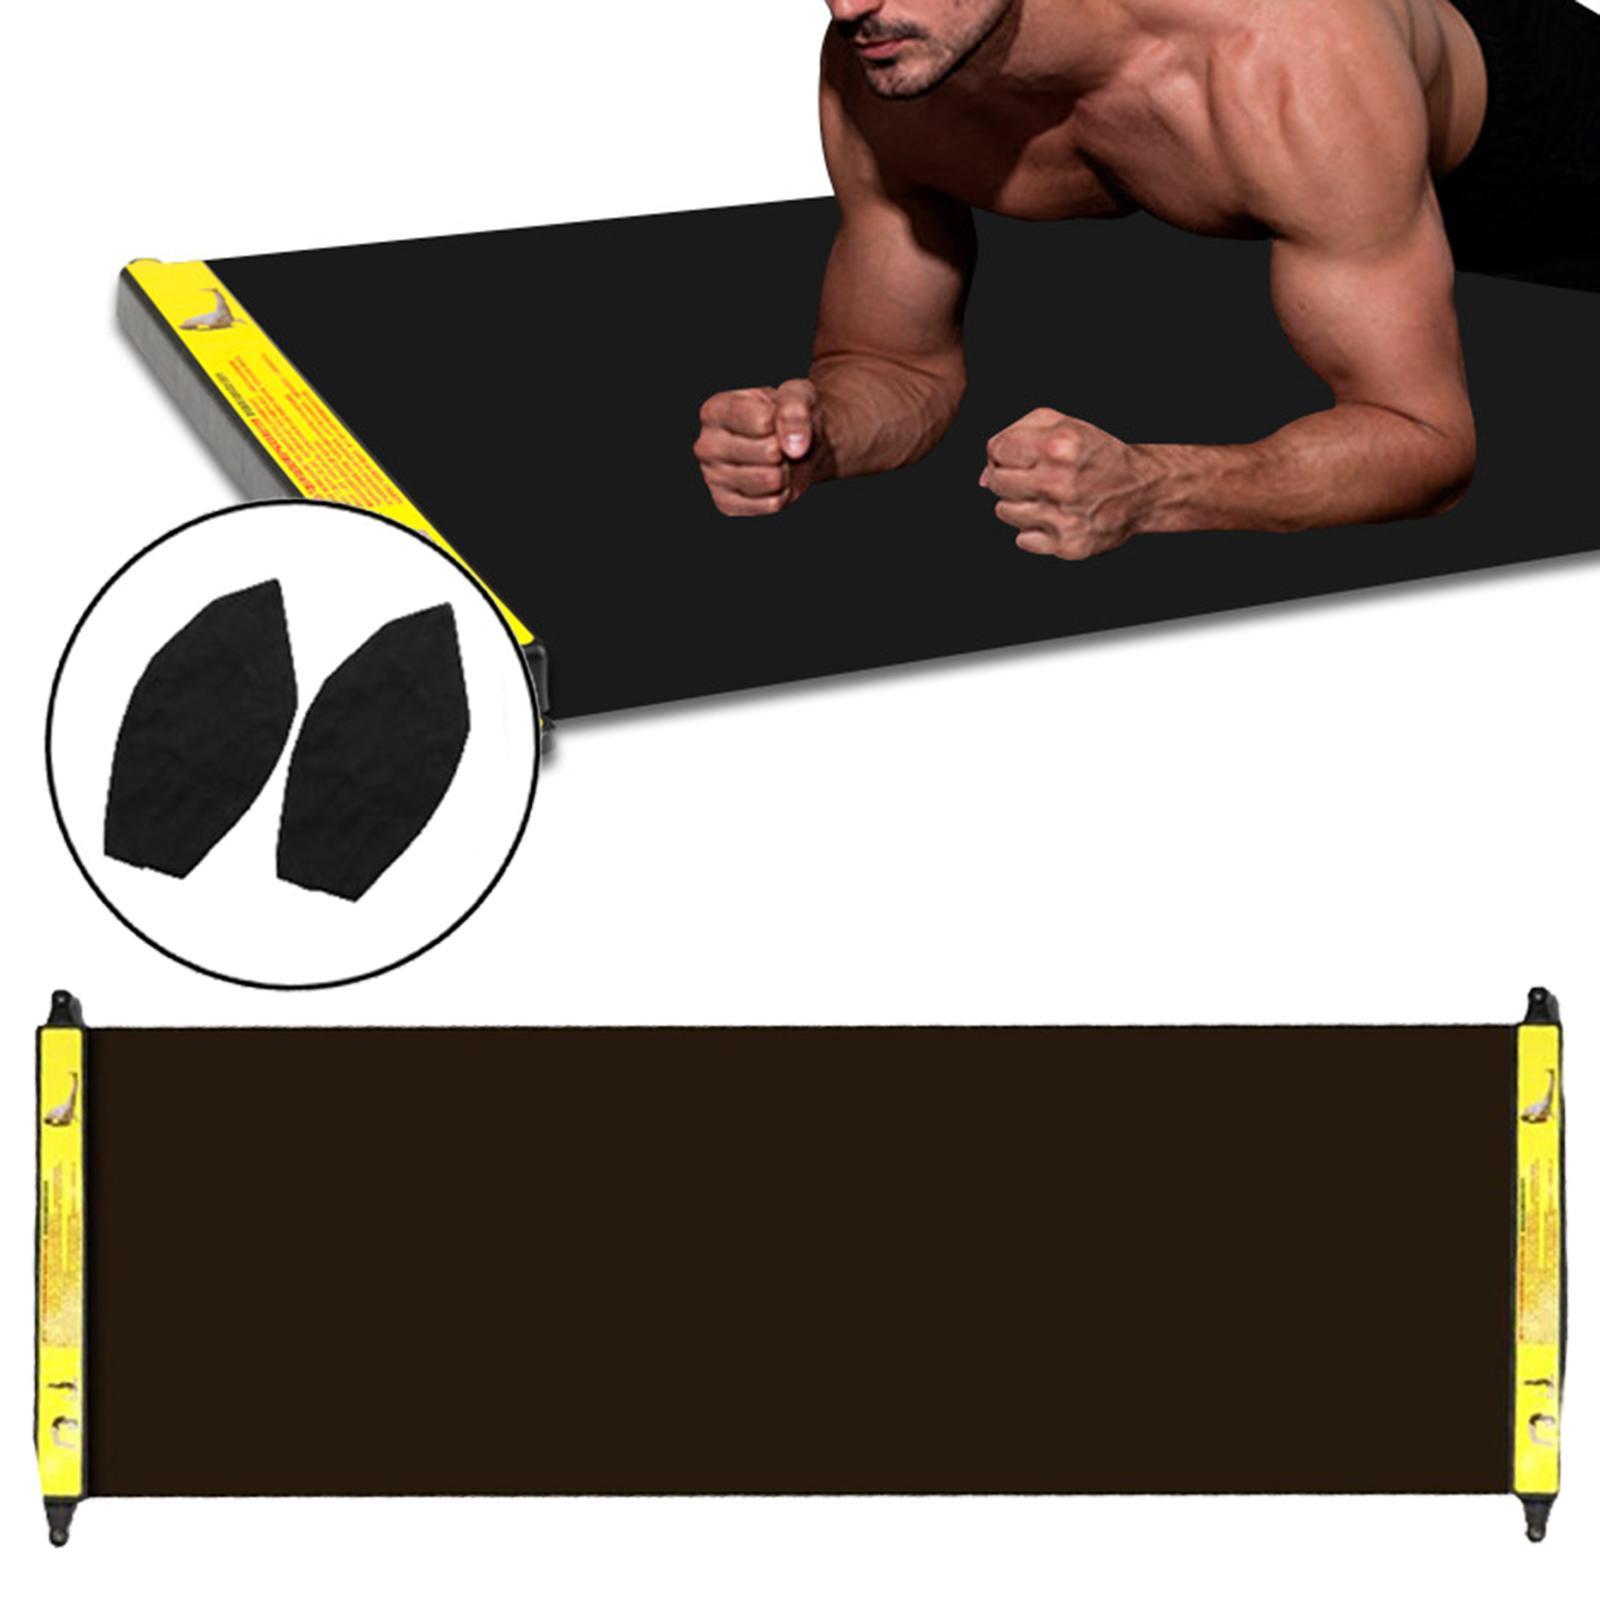 Slide Board Home Gym Equipment for Balance Cardio Exercis